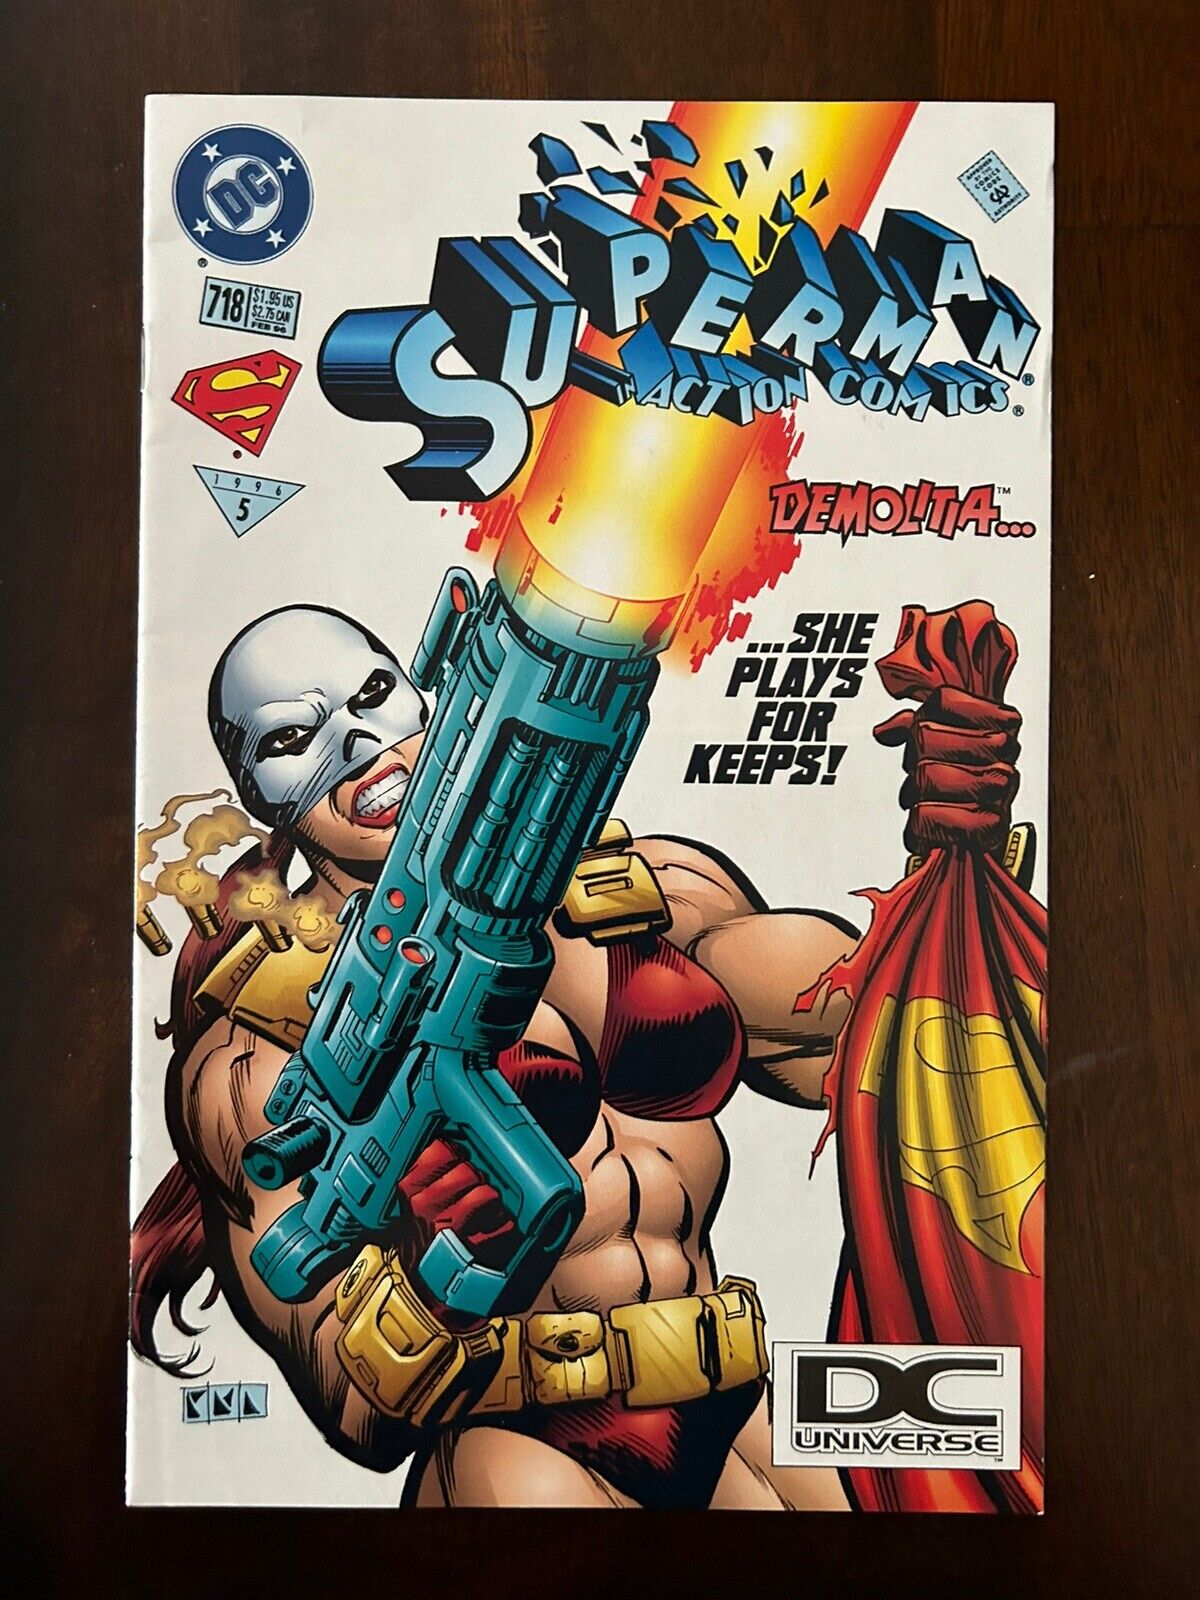 Superman in action comics #718 (DC universe logo). Rare